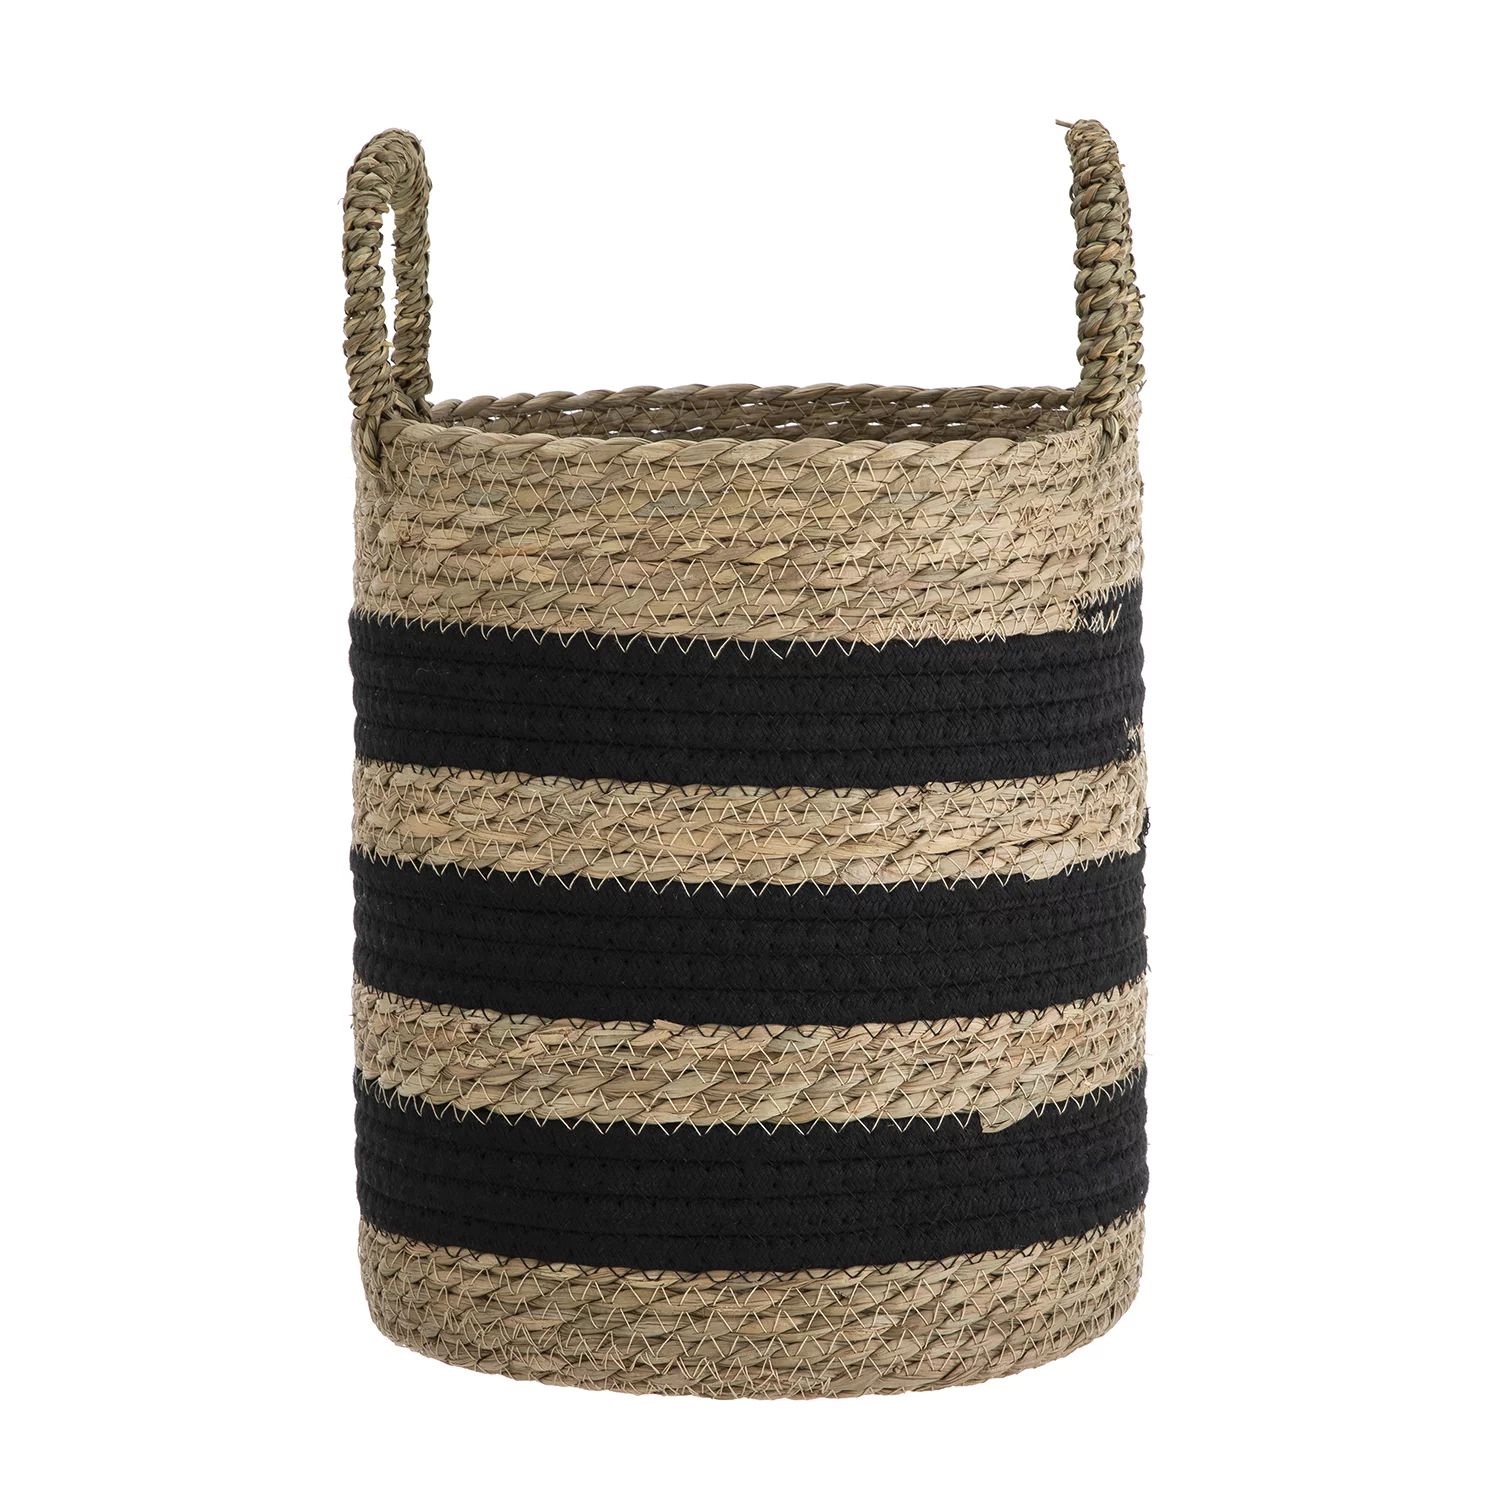 Mainstays Natural and Black Rush Decorative Storage Basket with Handles, 11.4", Round | Walmart (US)